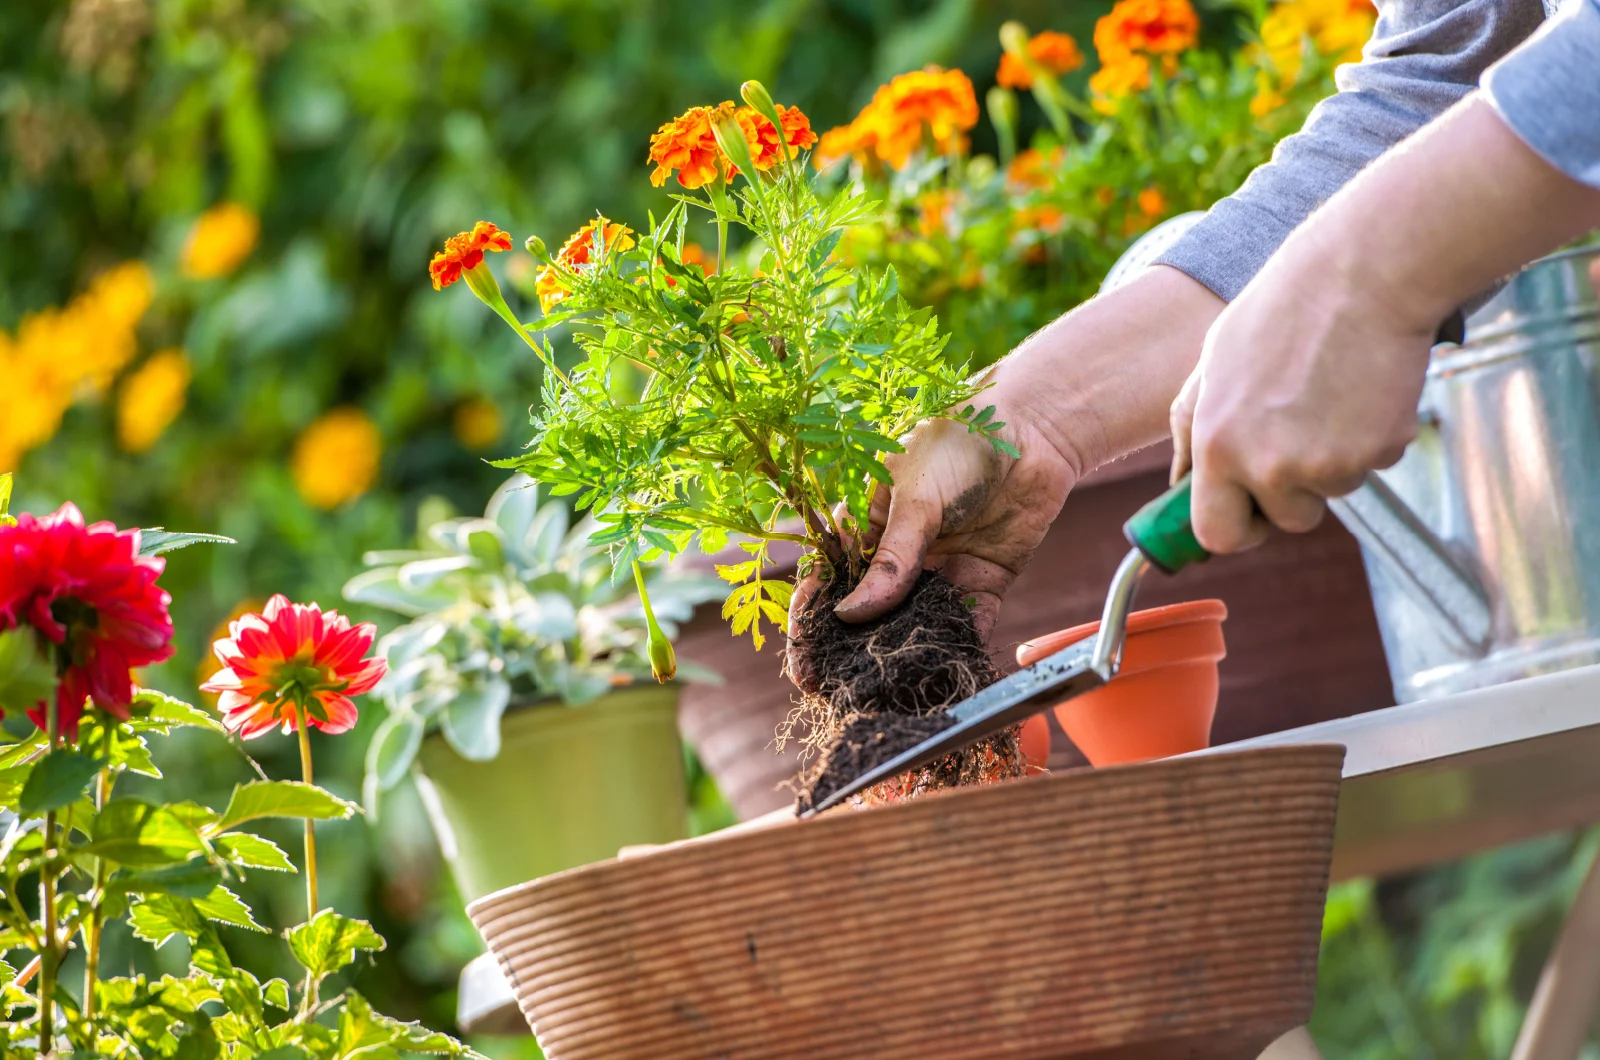 Gardeners hand planting flowers in pot